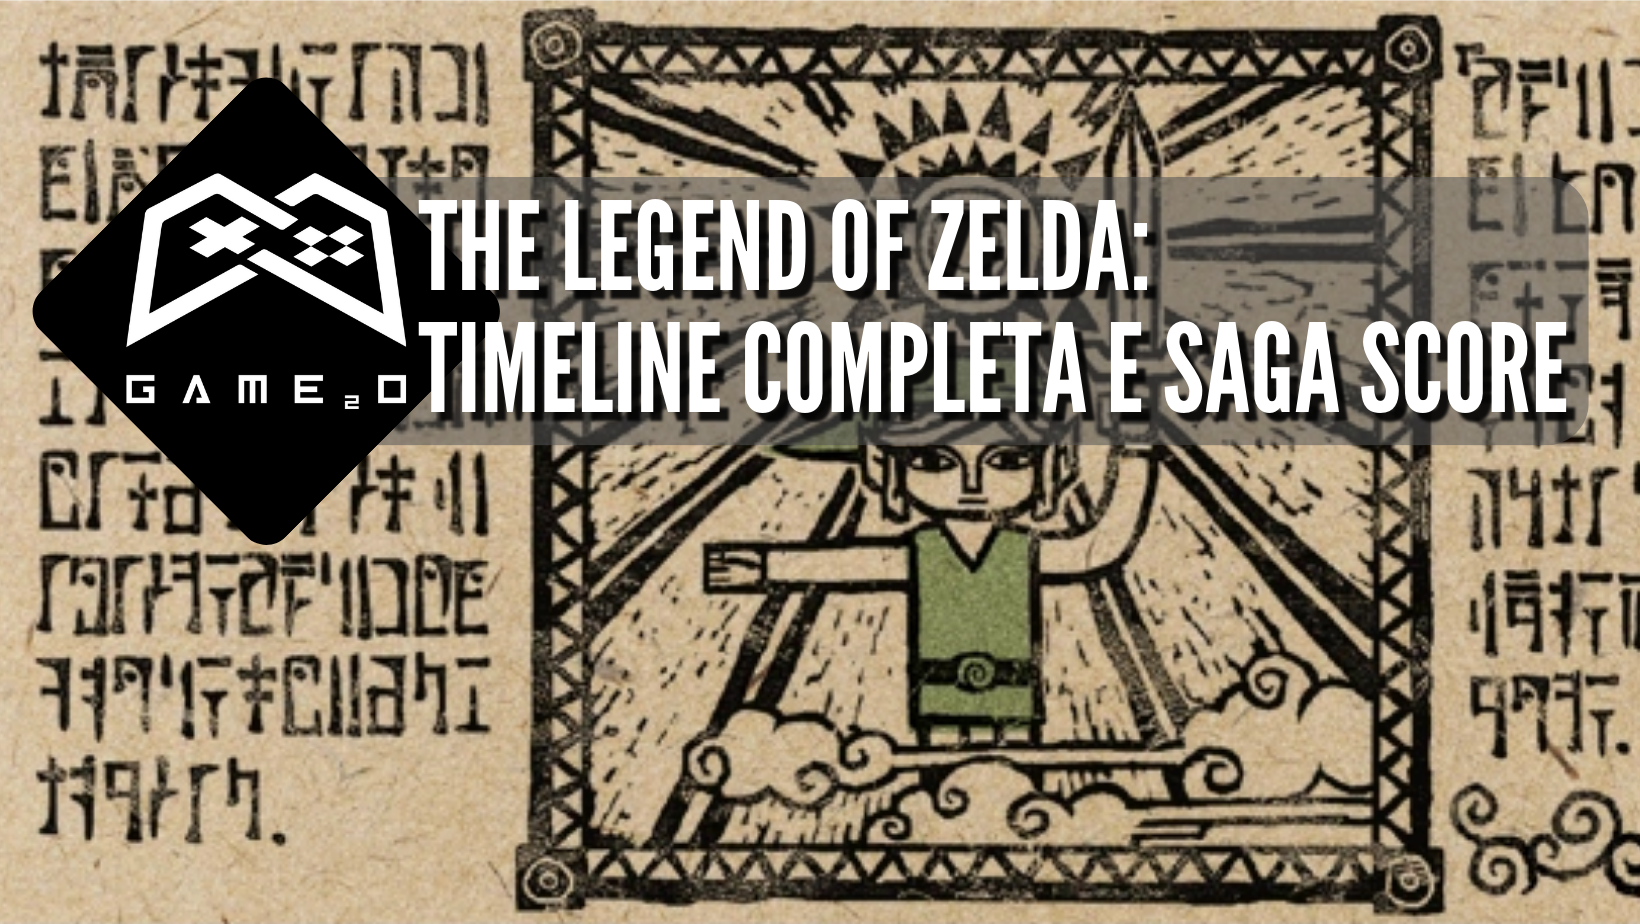 Zelda Timeline e saga score